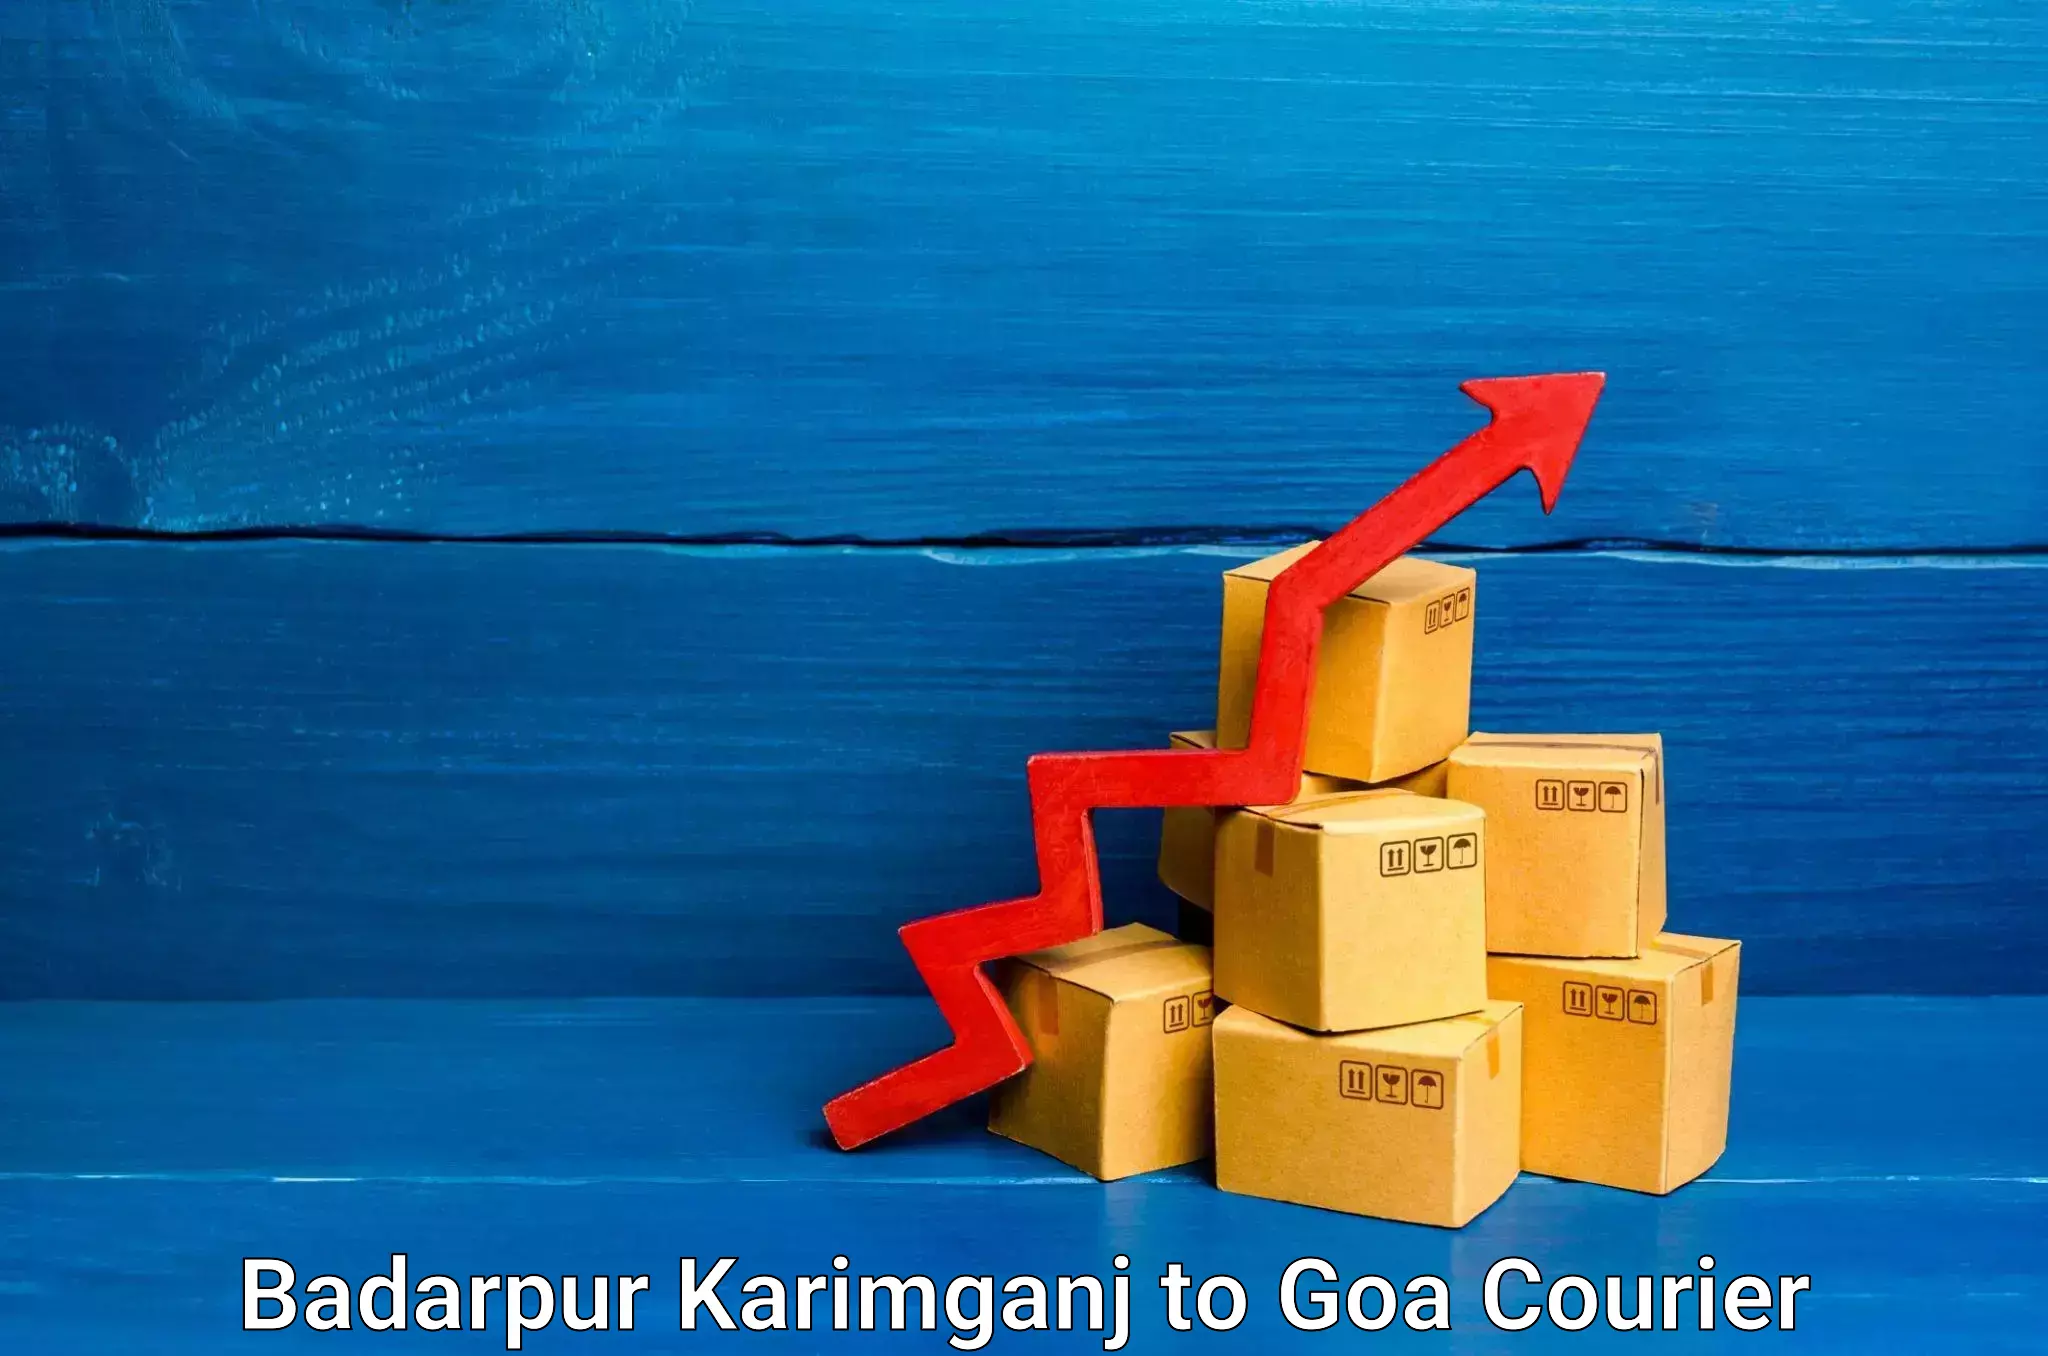 Courier service innovation Badarpur Karimganj to Goa